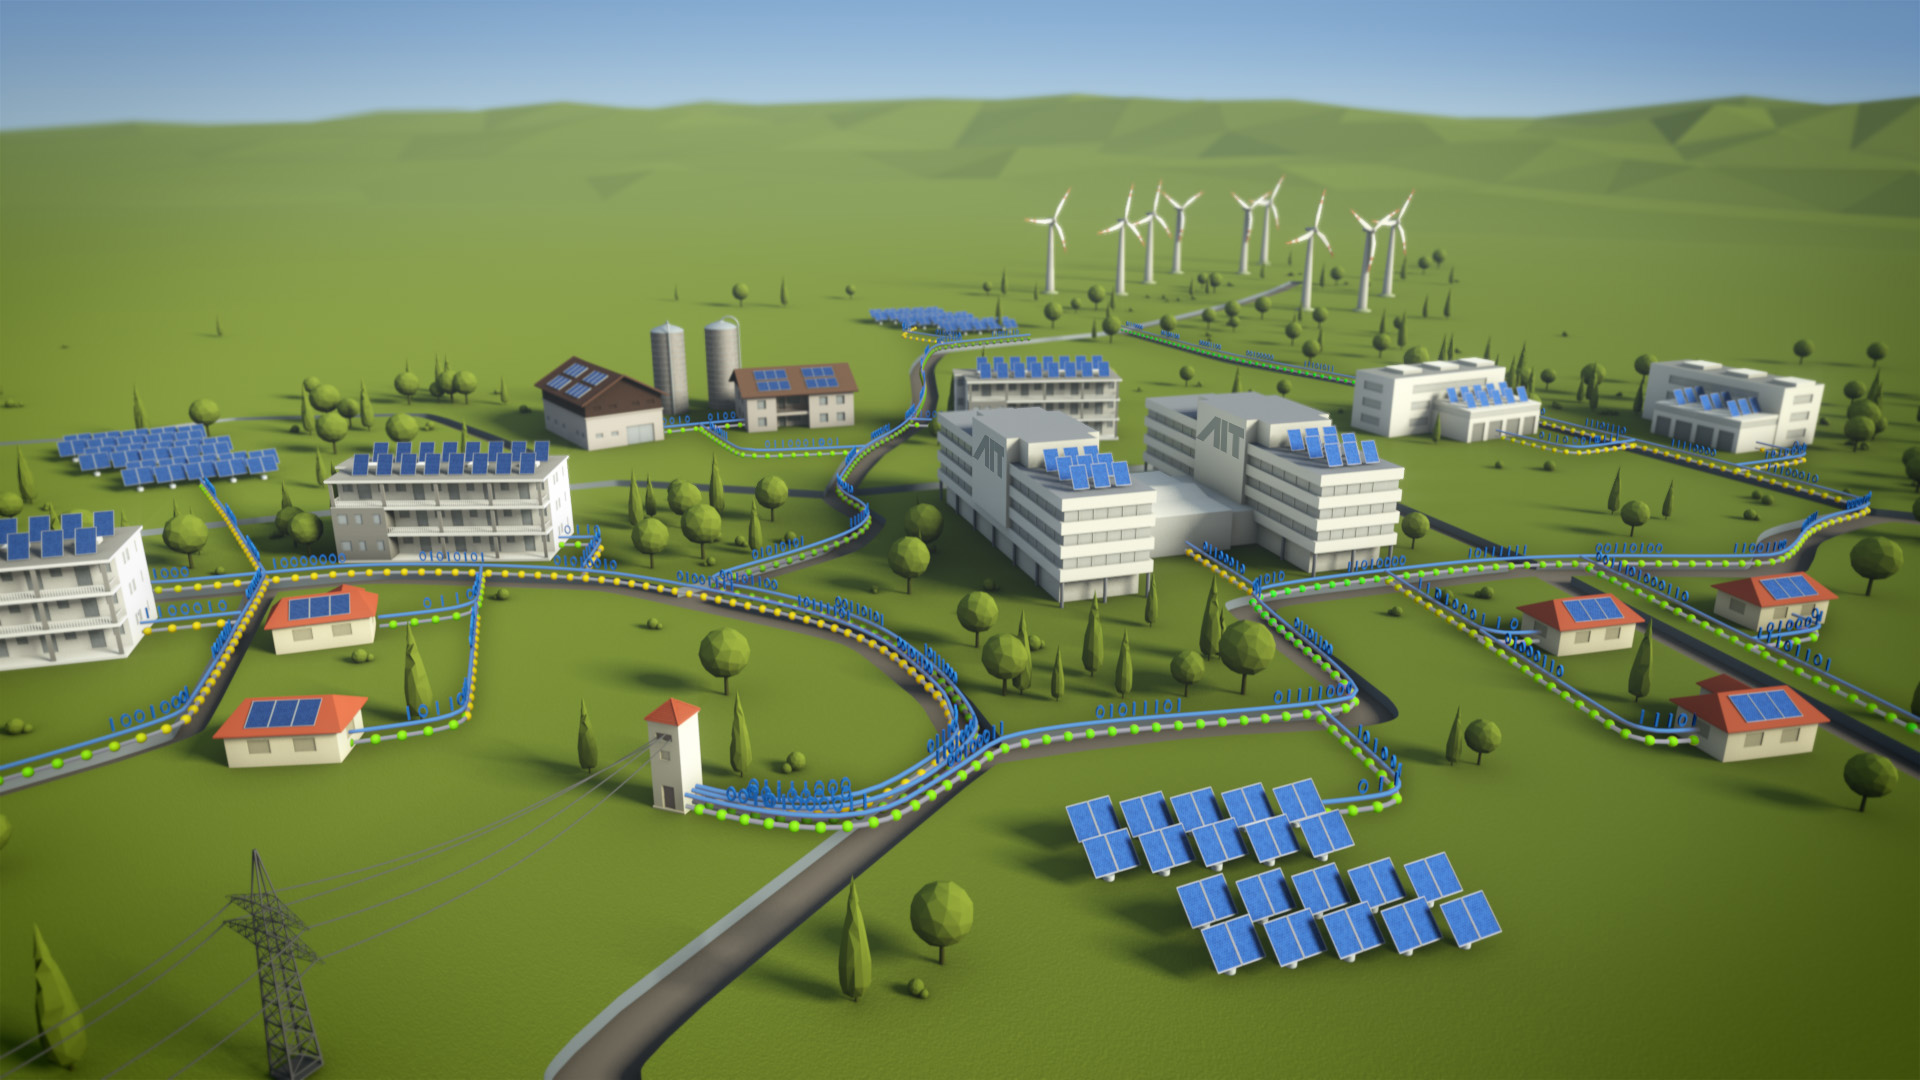 Visualisation of energy communities